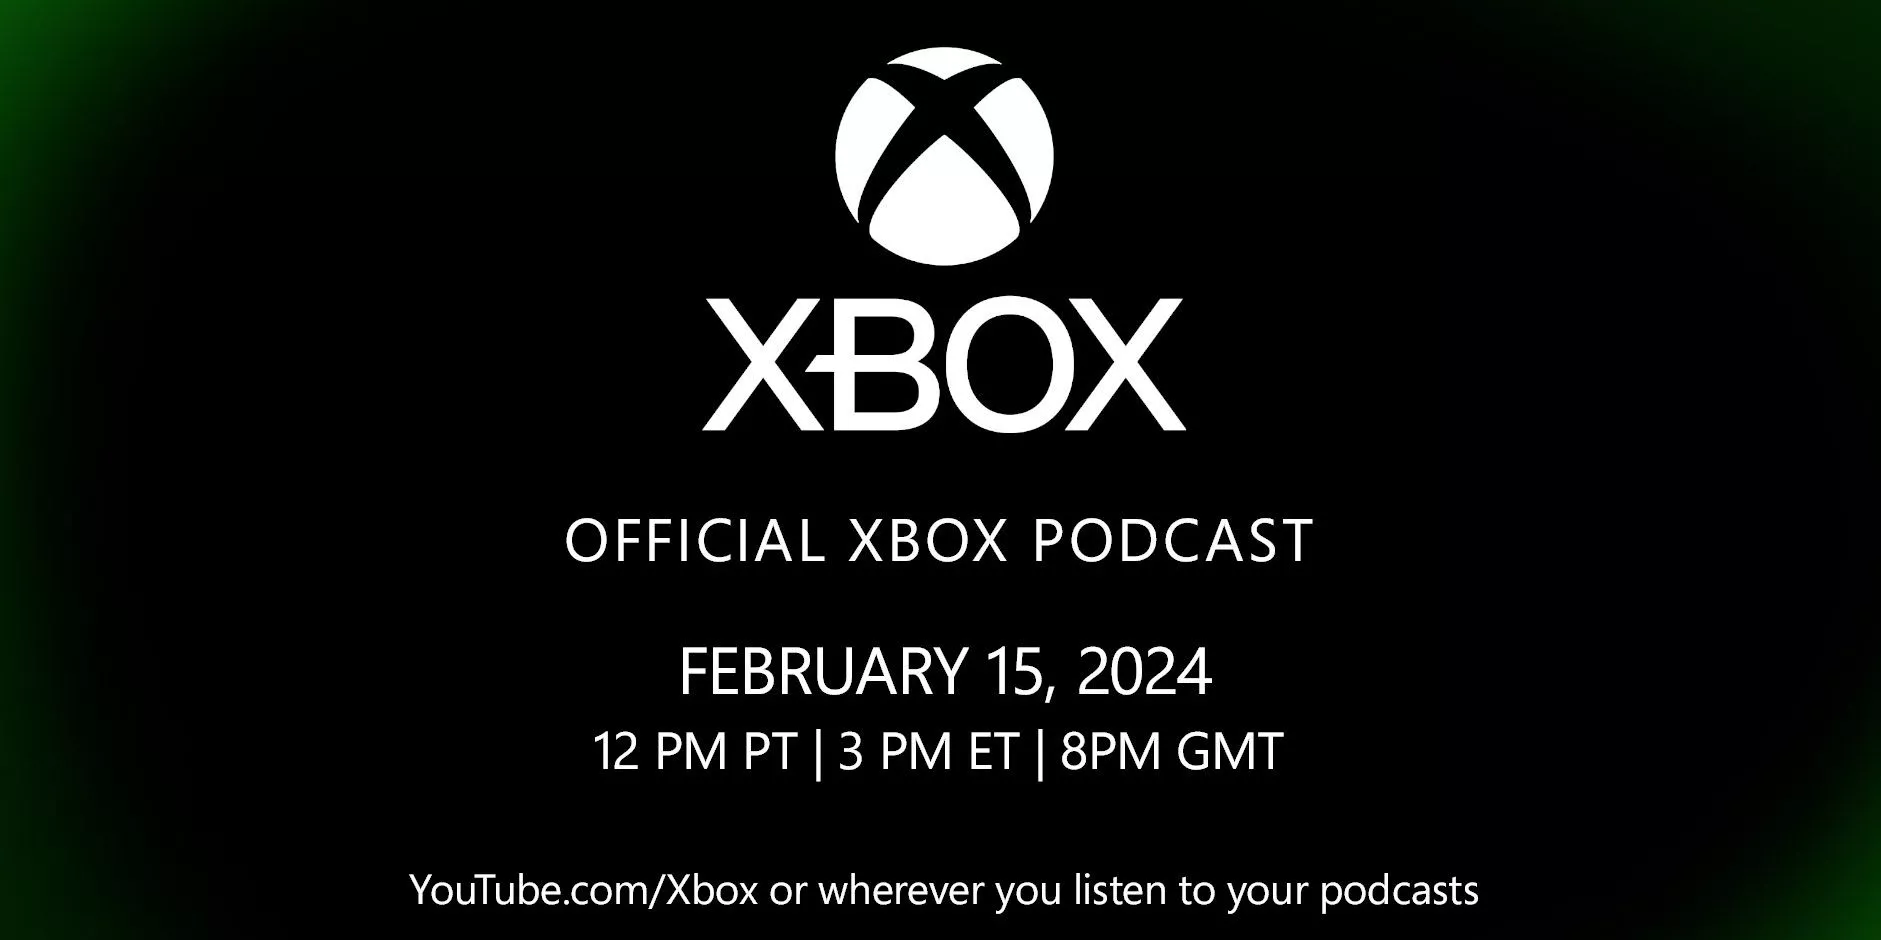 Xbox-Podcast zur Zukunft des Xbox-Business angekündigt Heropic